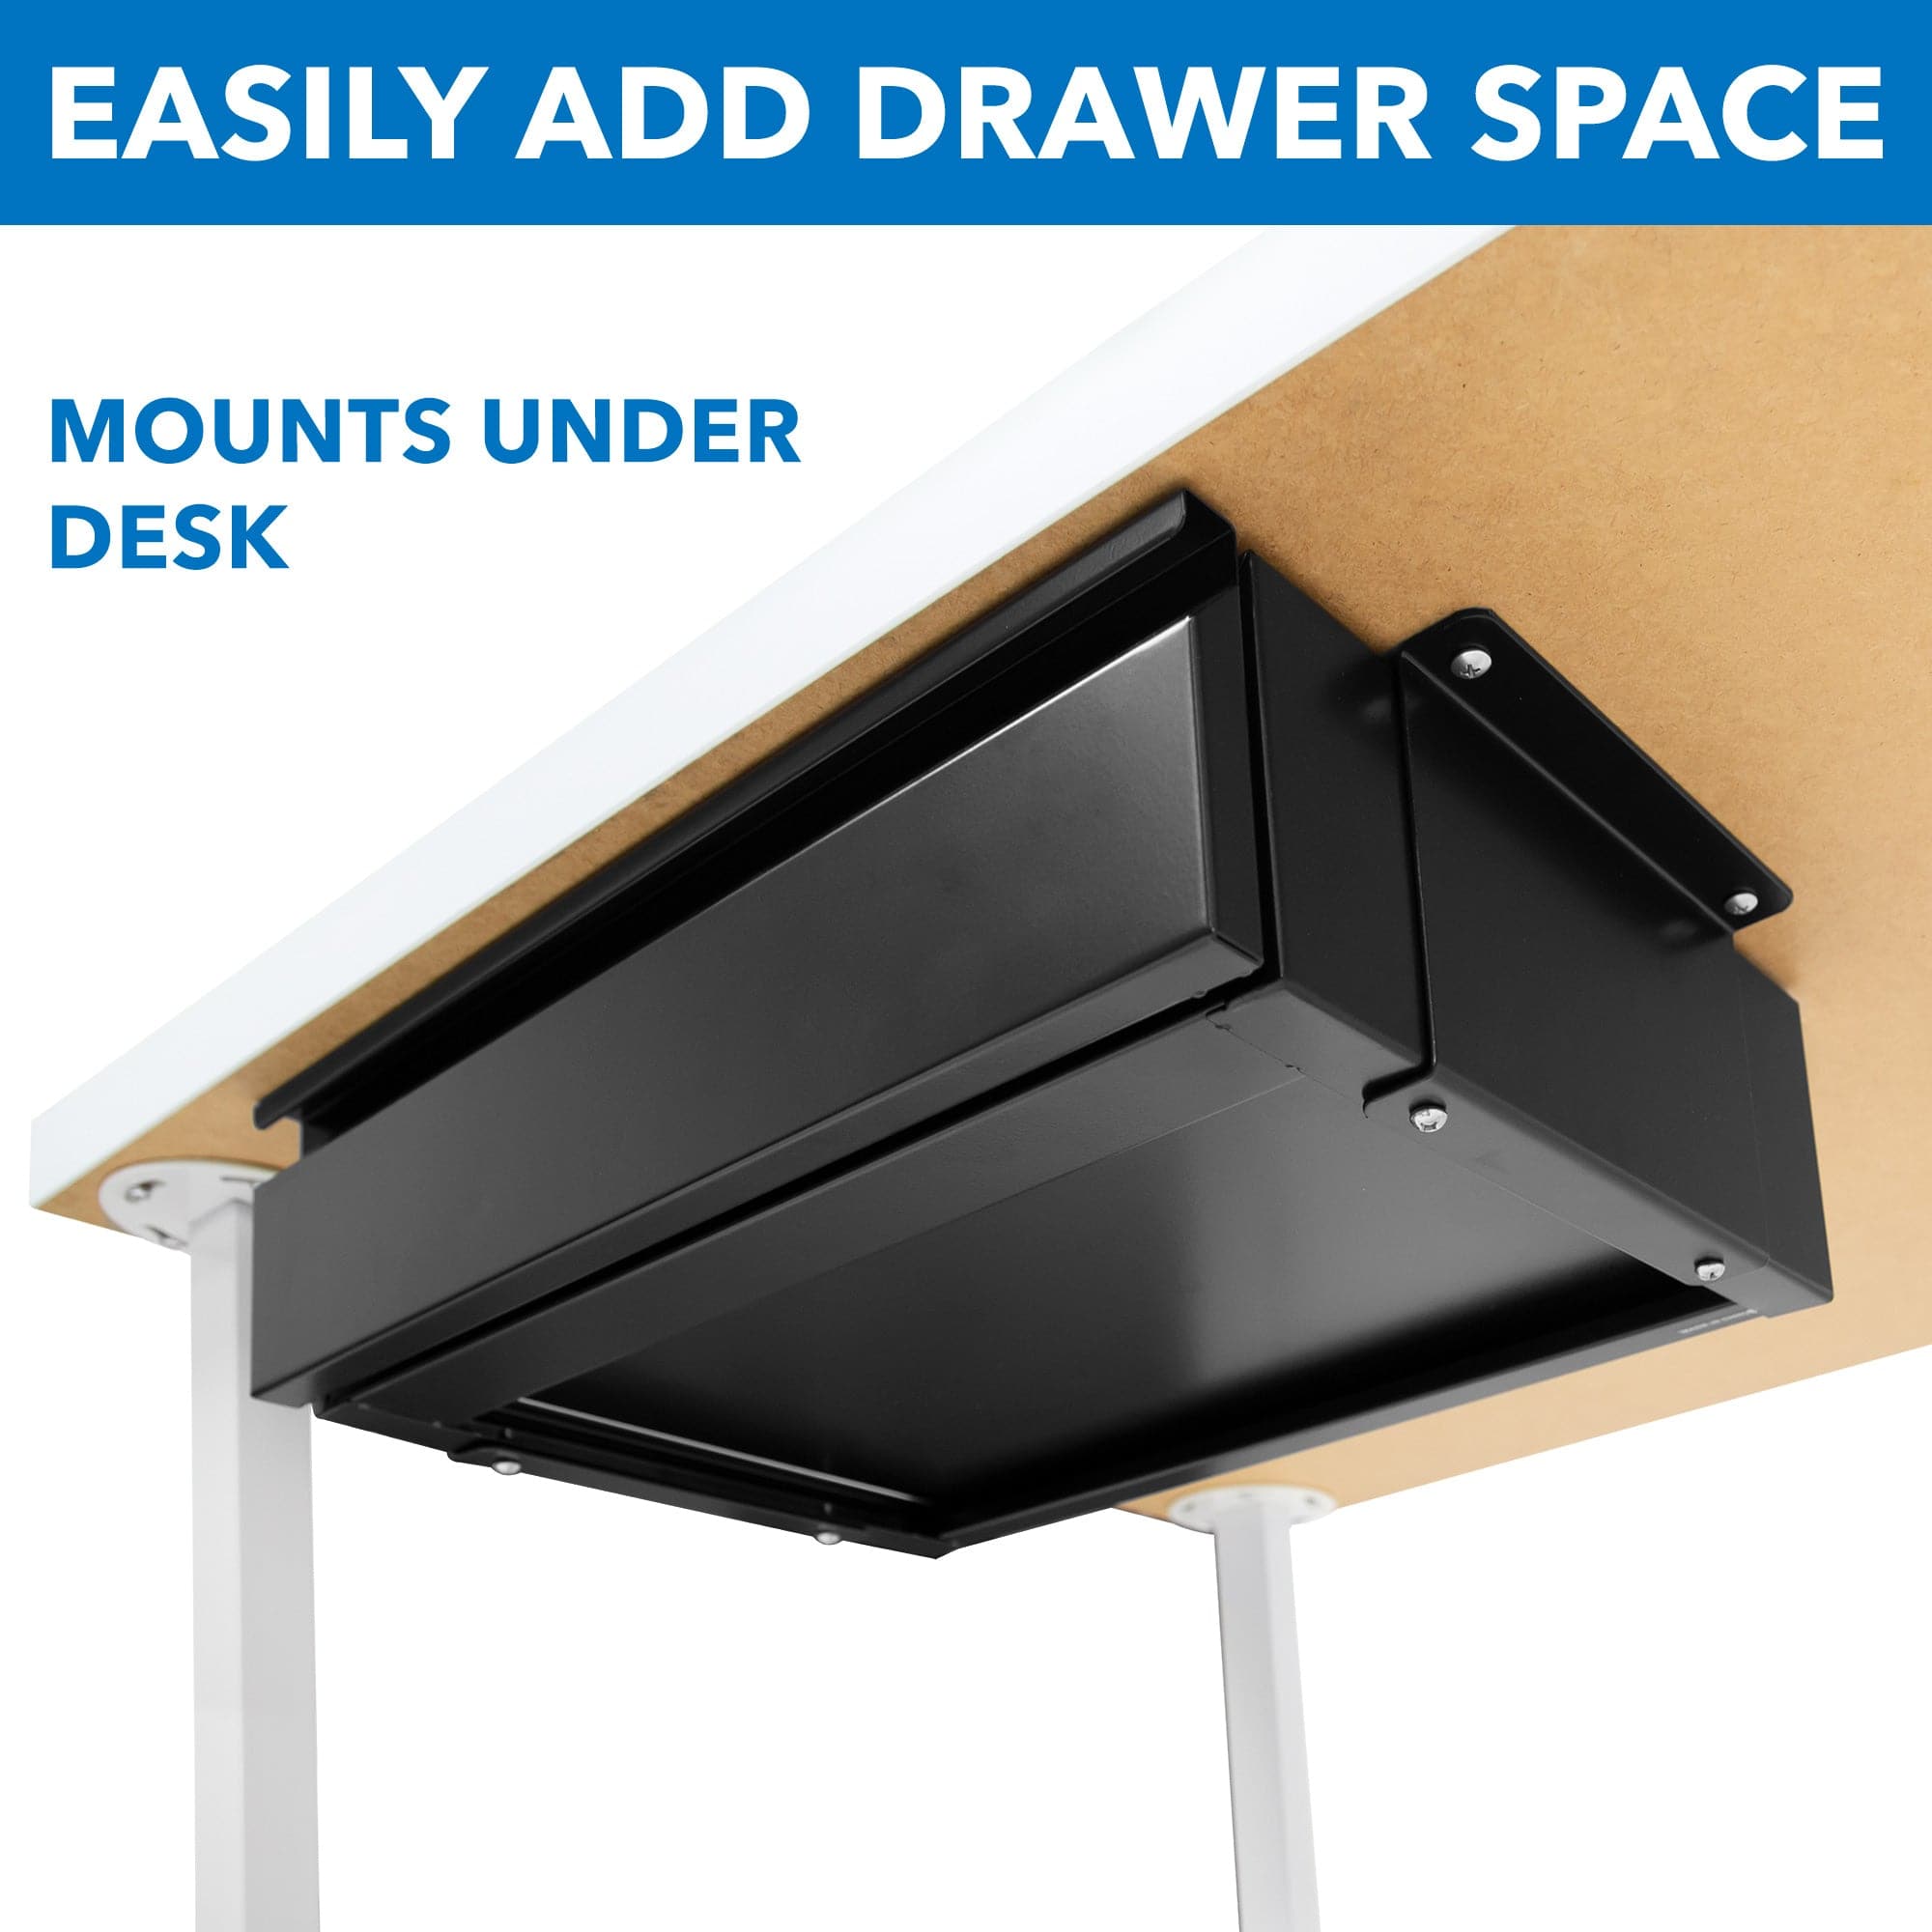 Under Desk Pull-Out Drawer Kit